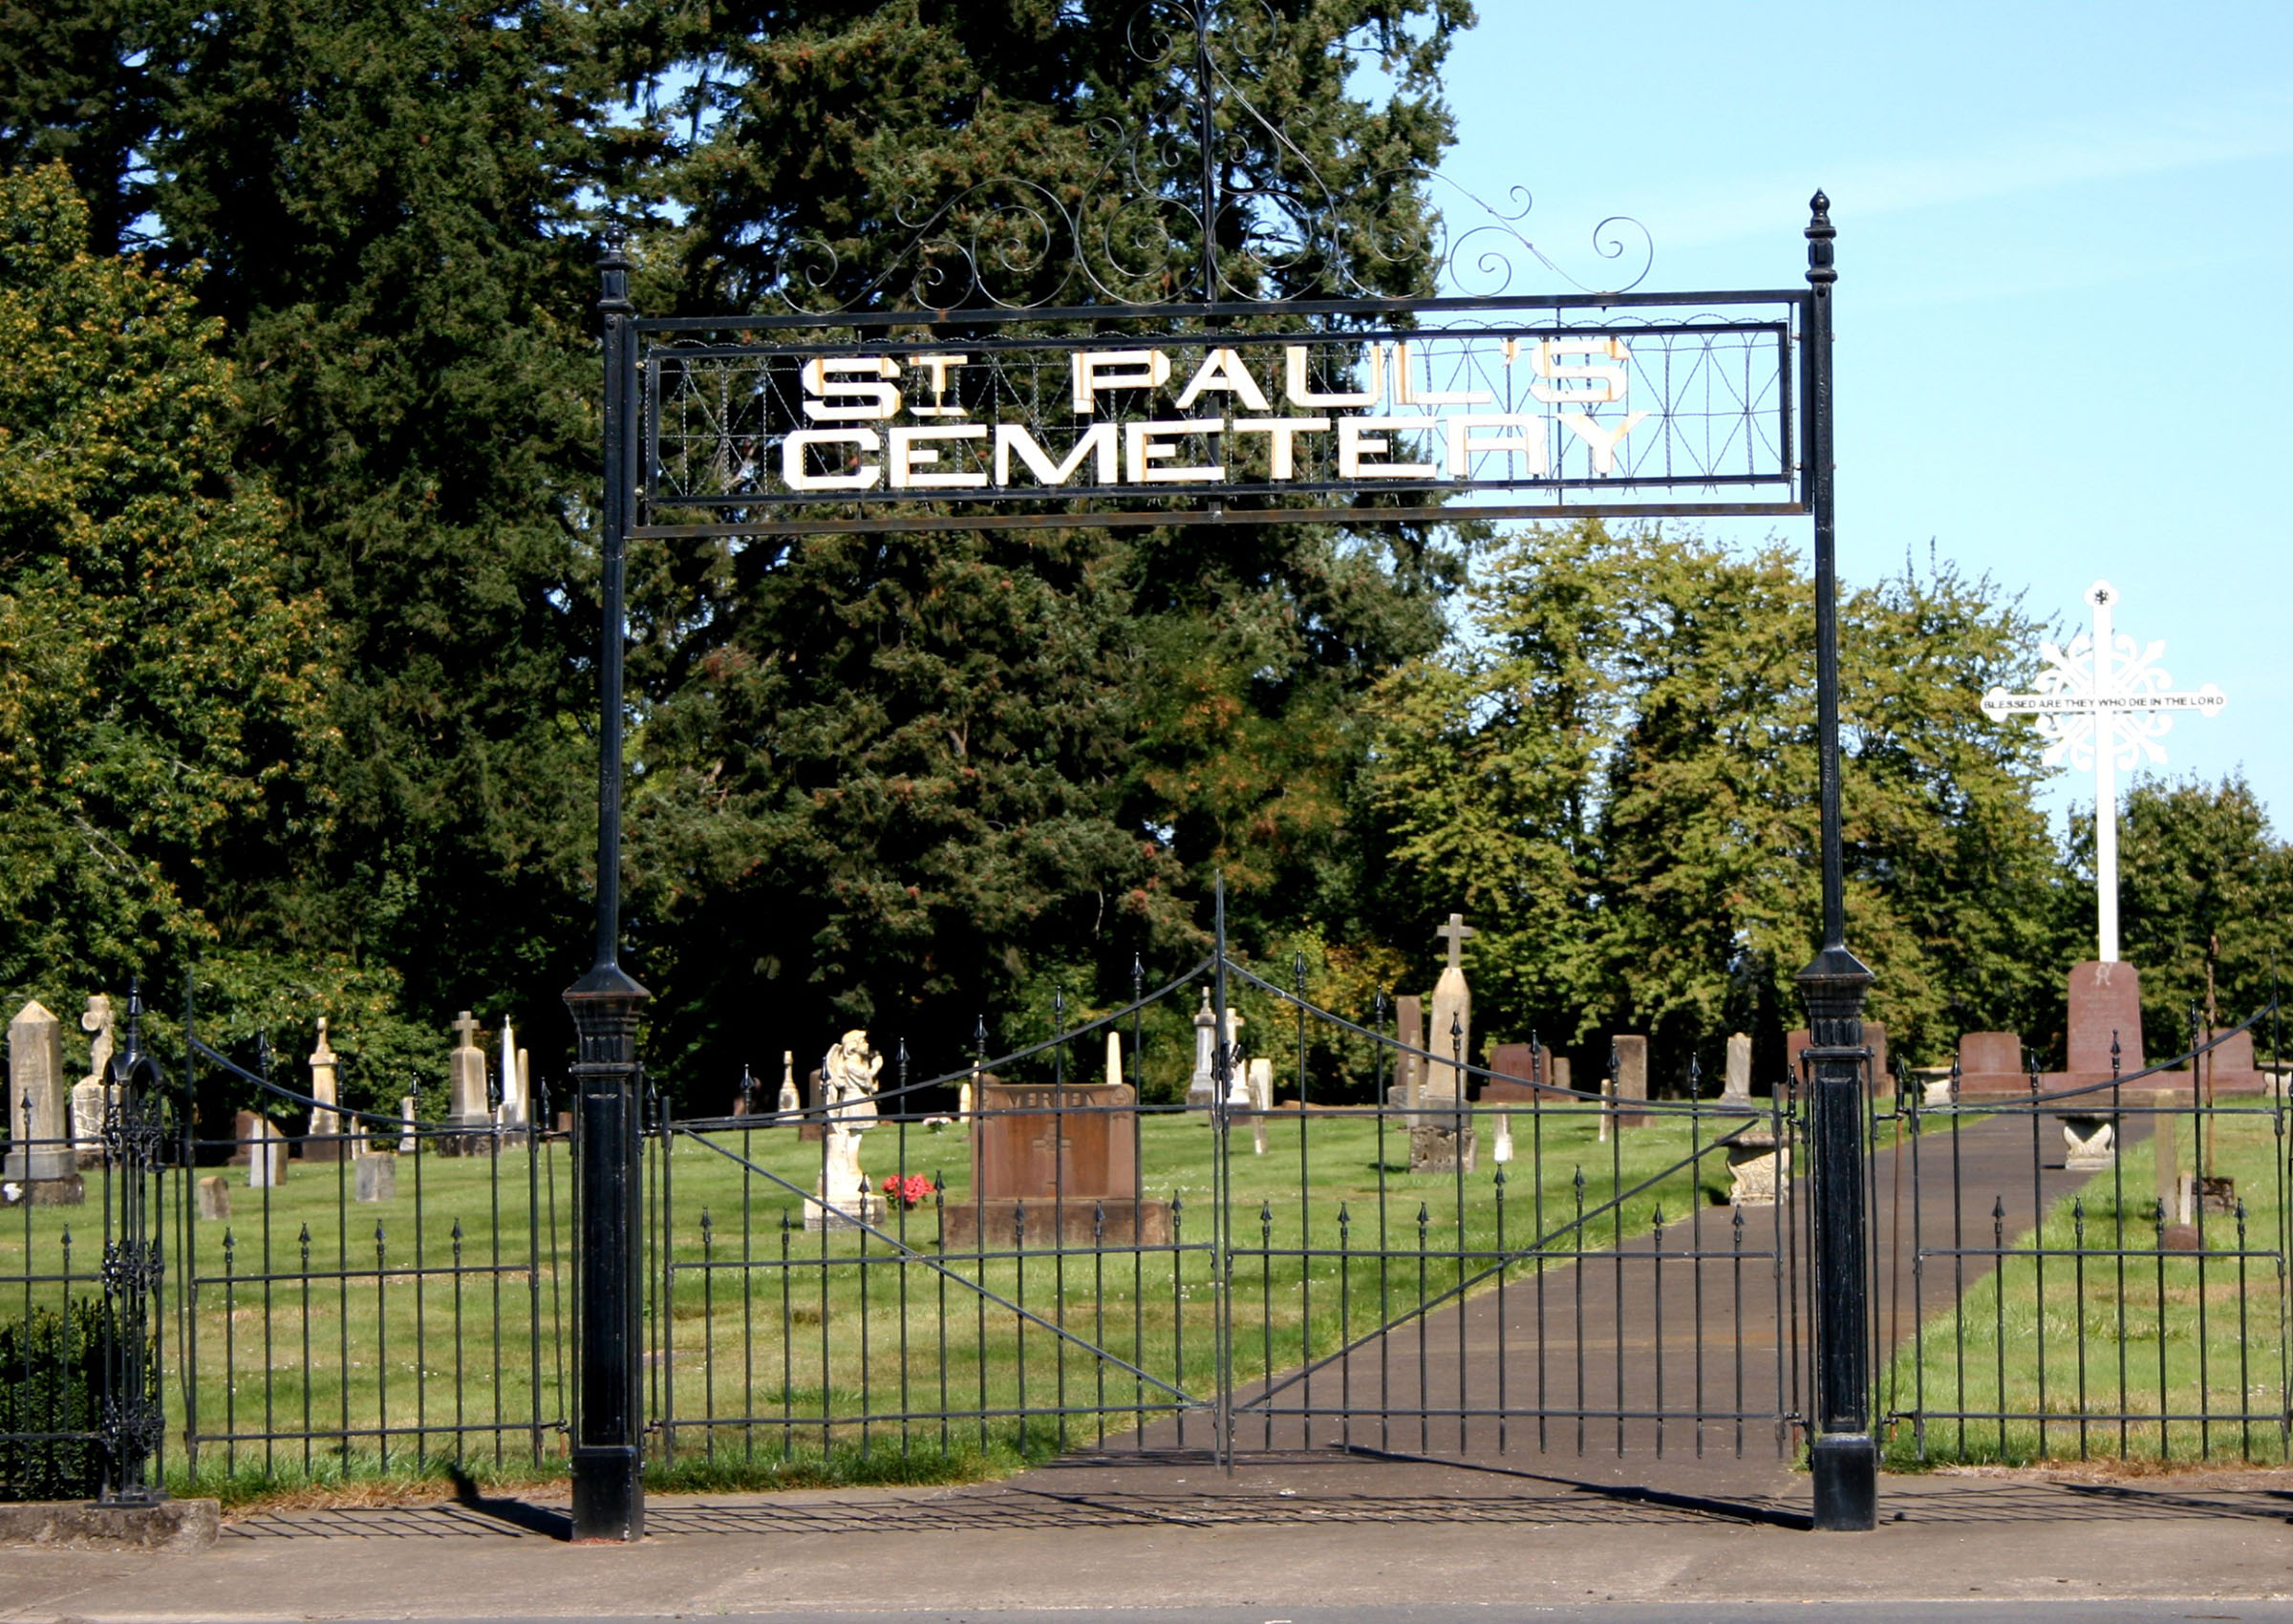 St Paul Cemetery